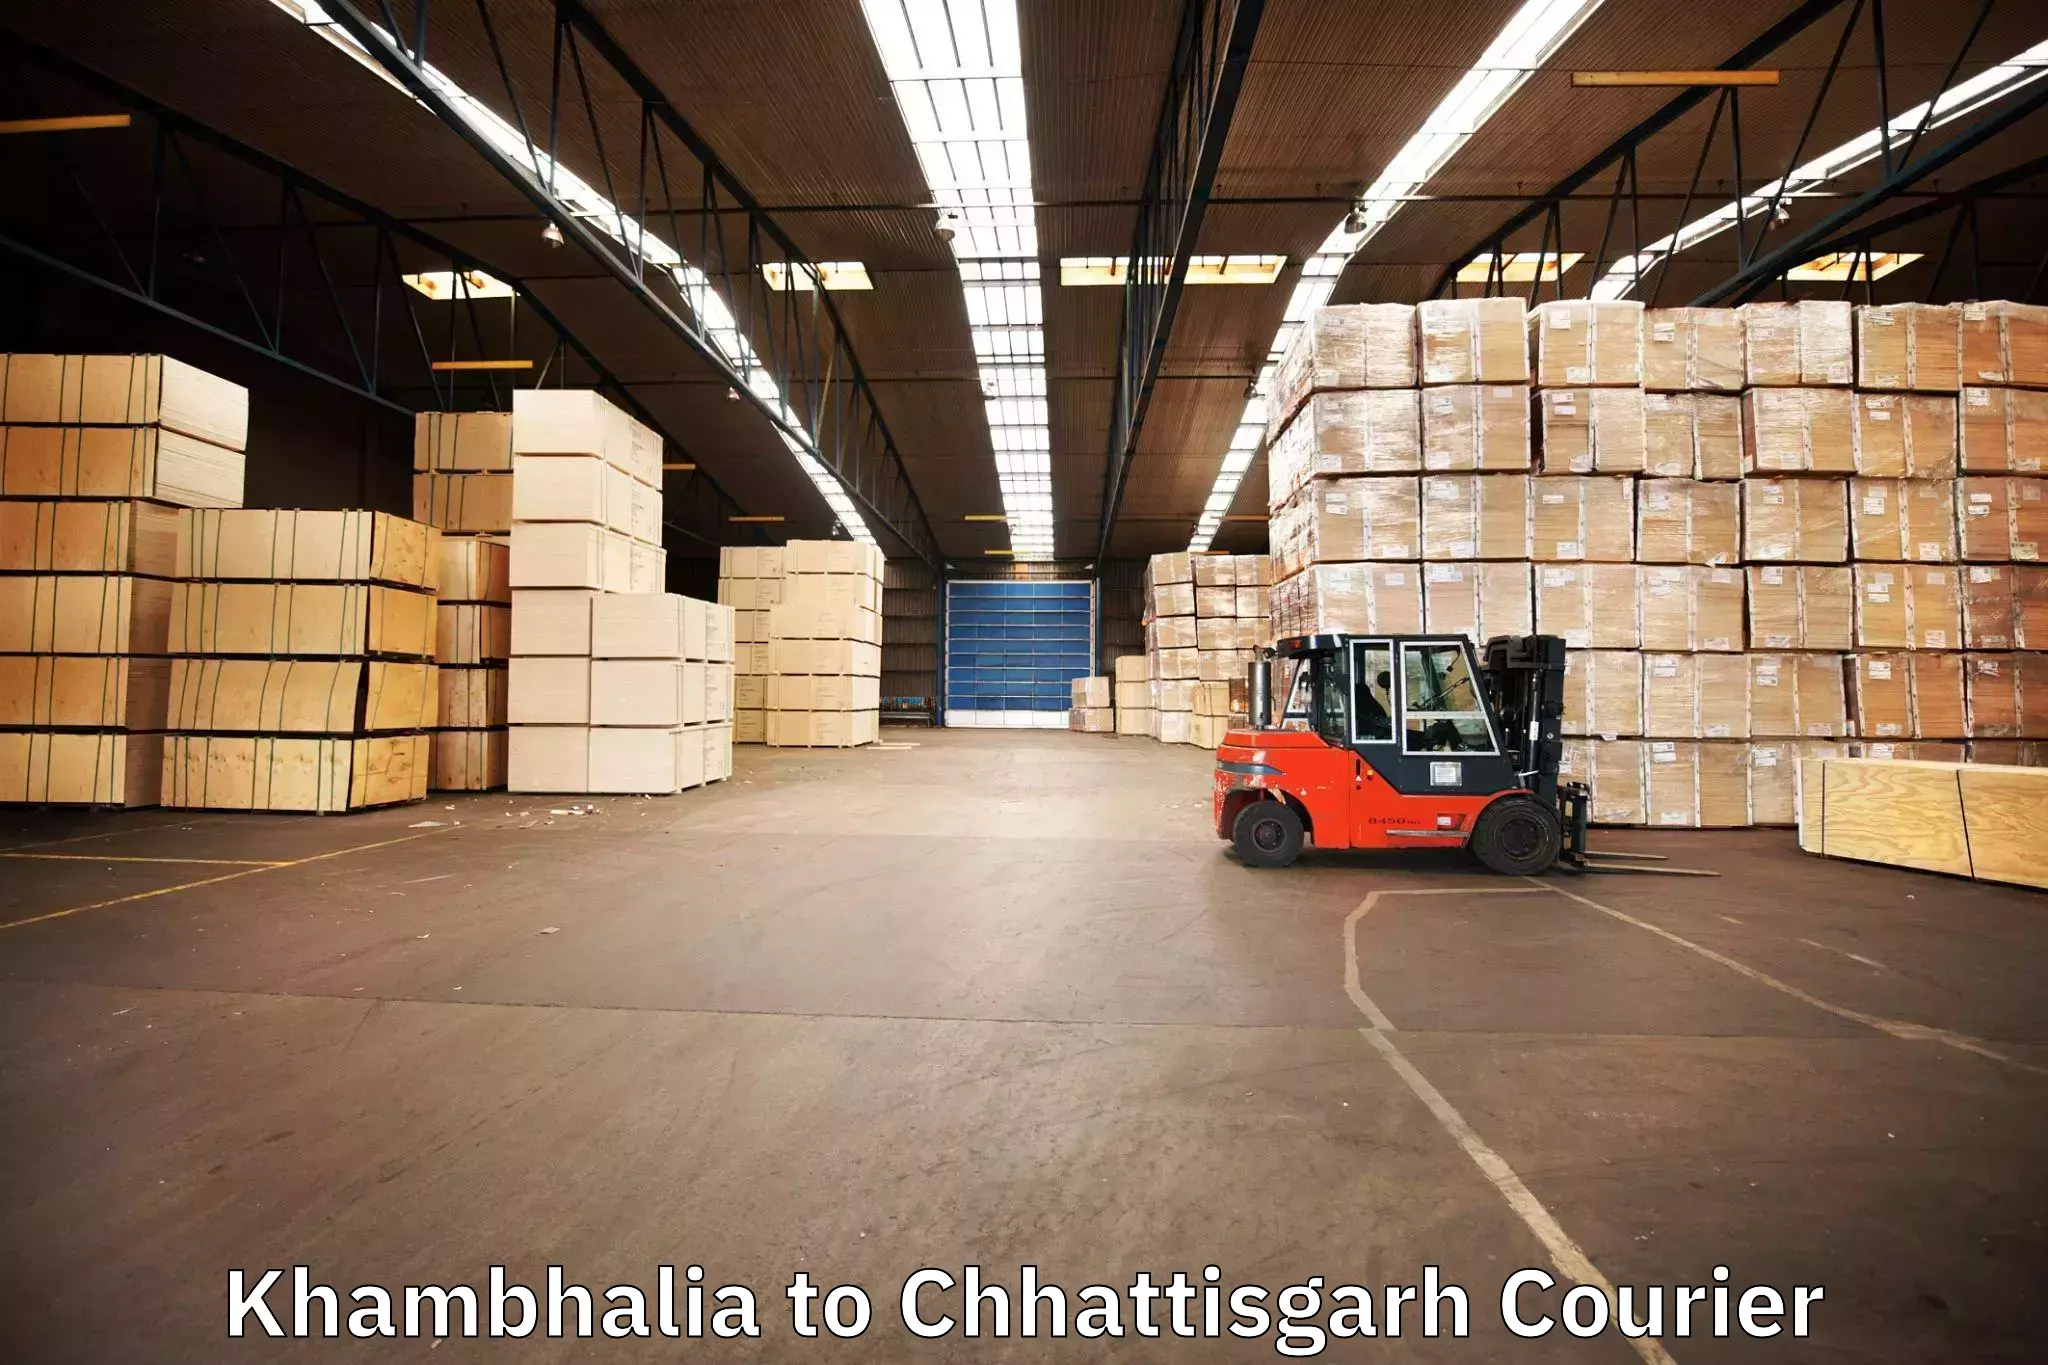 Moving and storage services in Khambhalia to Patna Chhattisgarh